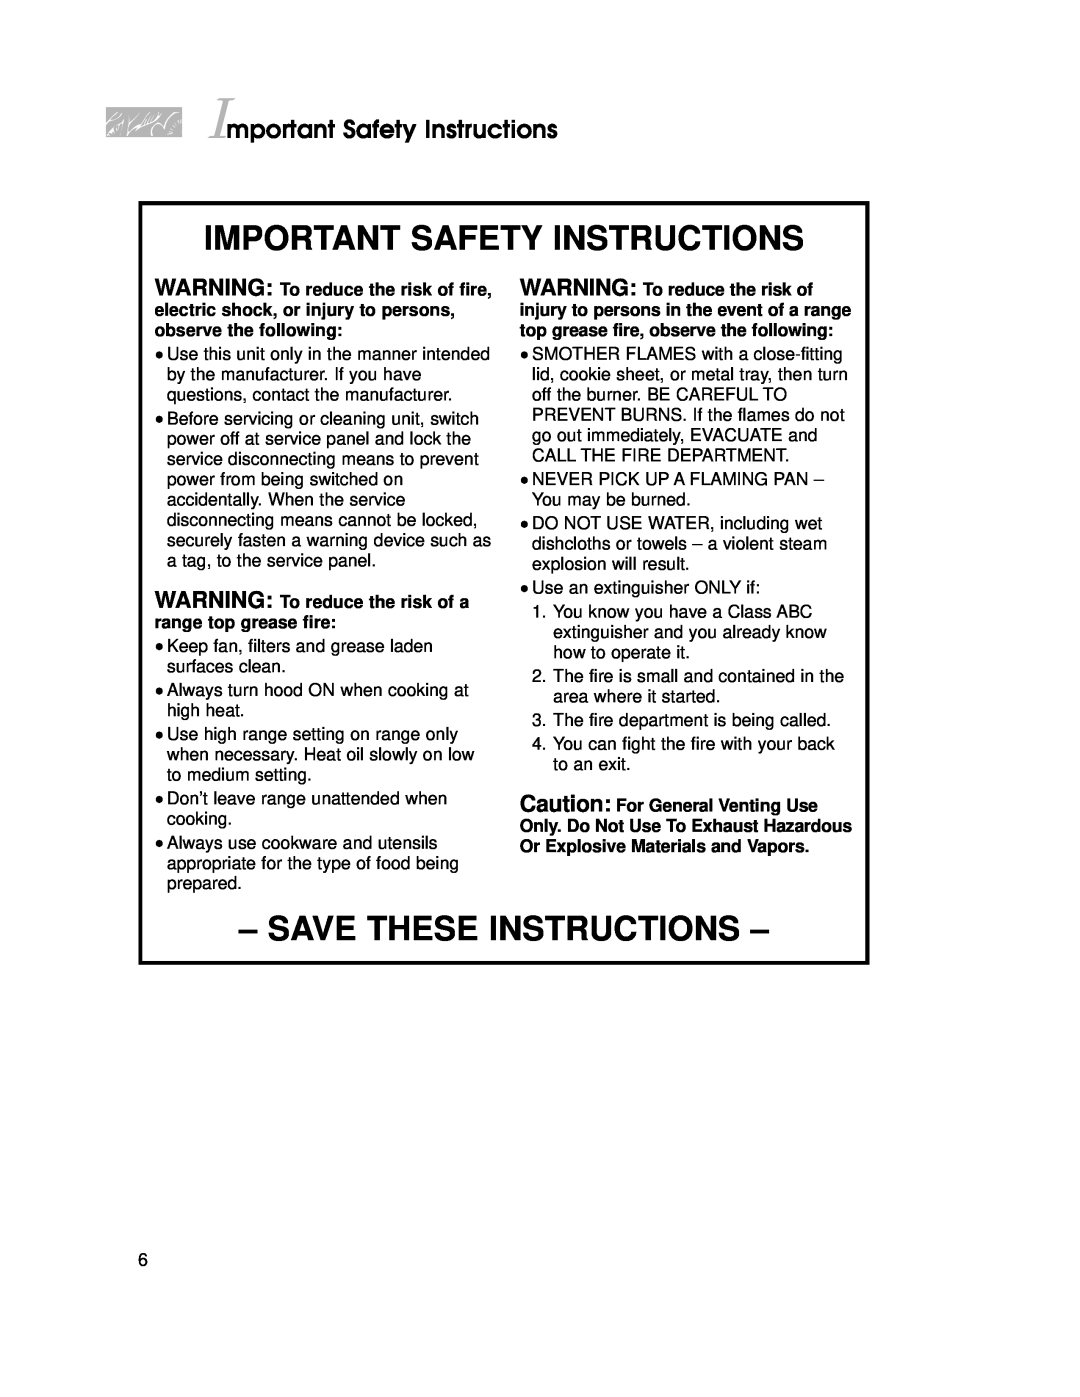 KitchenAid KKECT025, KSVD060B, KECG020, KGCT025, KECC027 Important Safety Instructions, Save These Instructions 